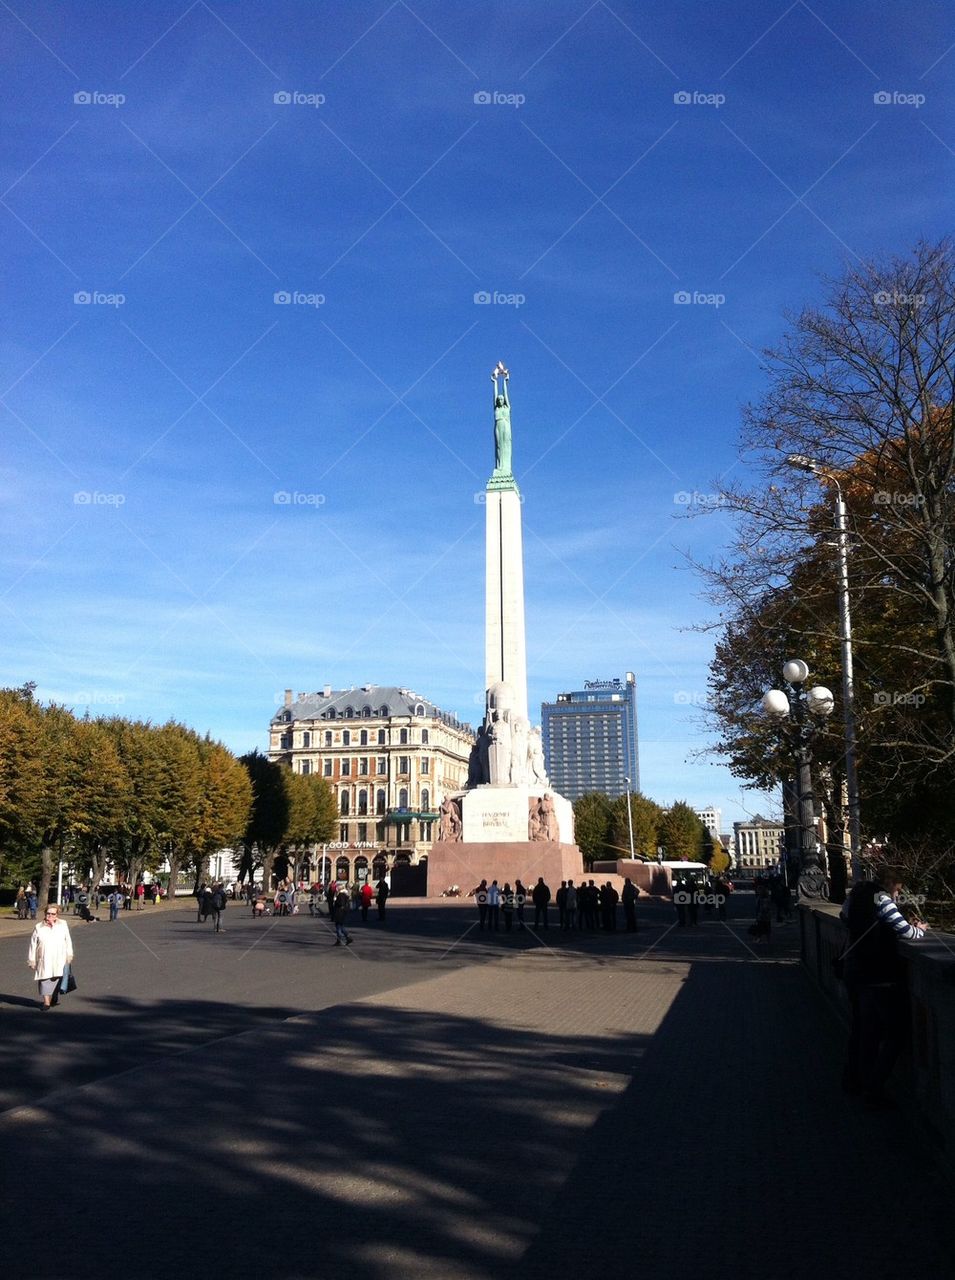 latvia monument / landmark by mikkohei